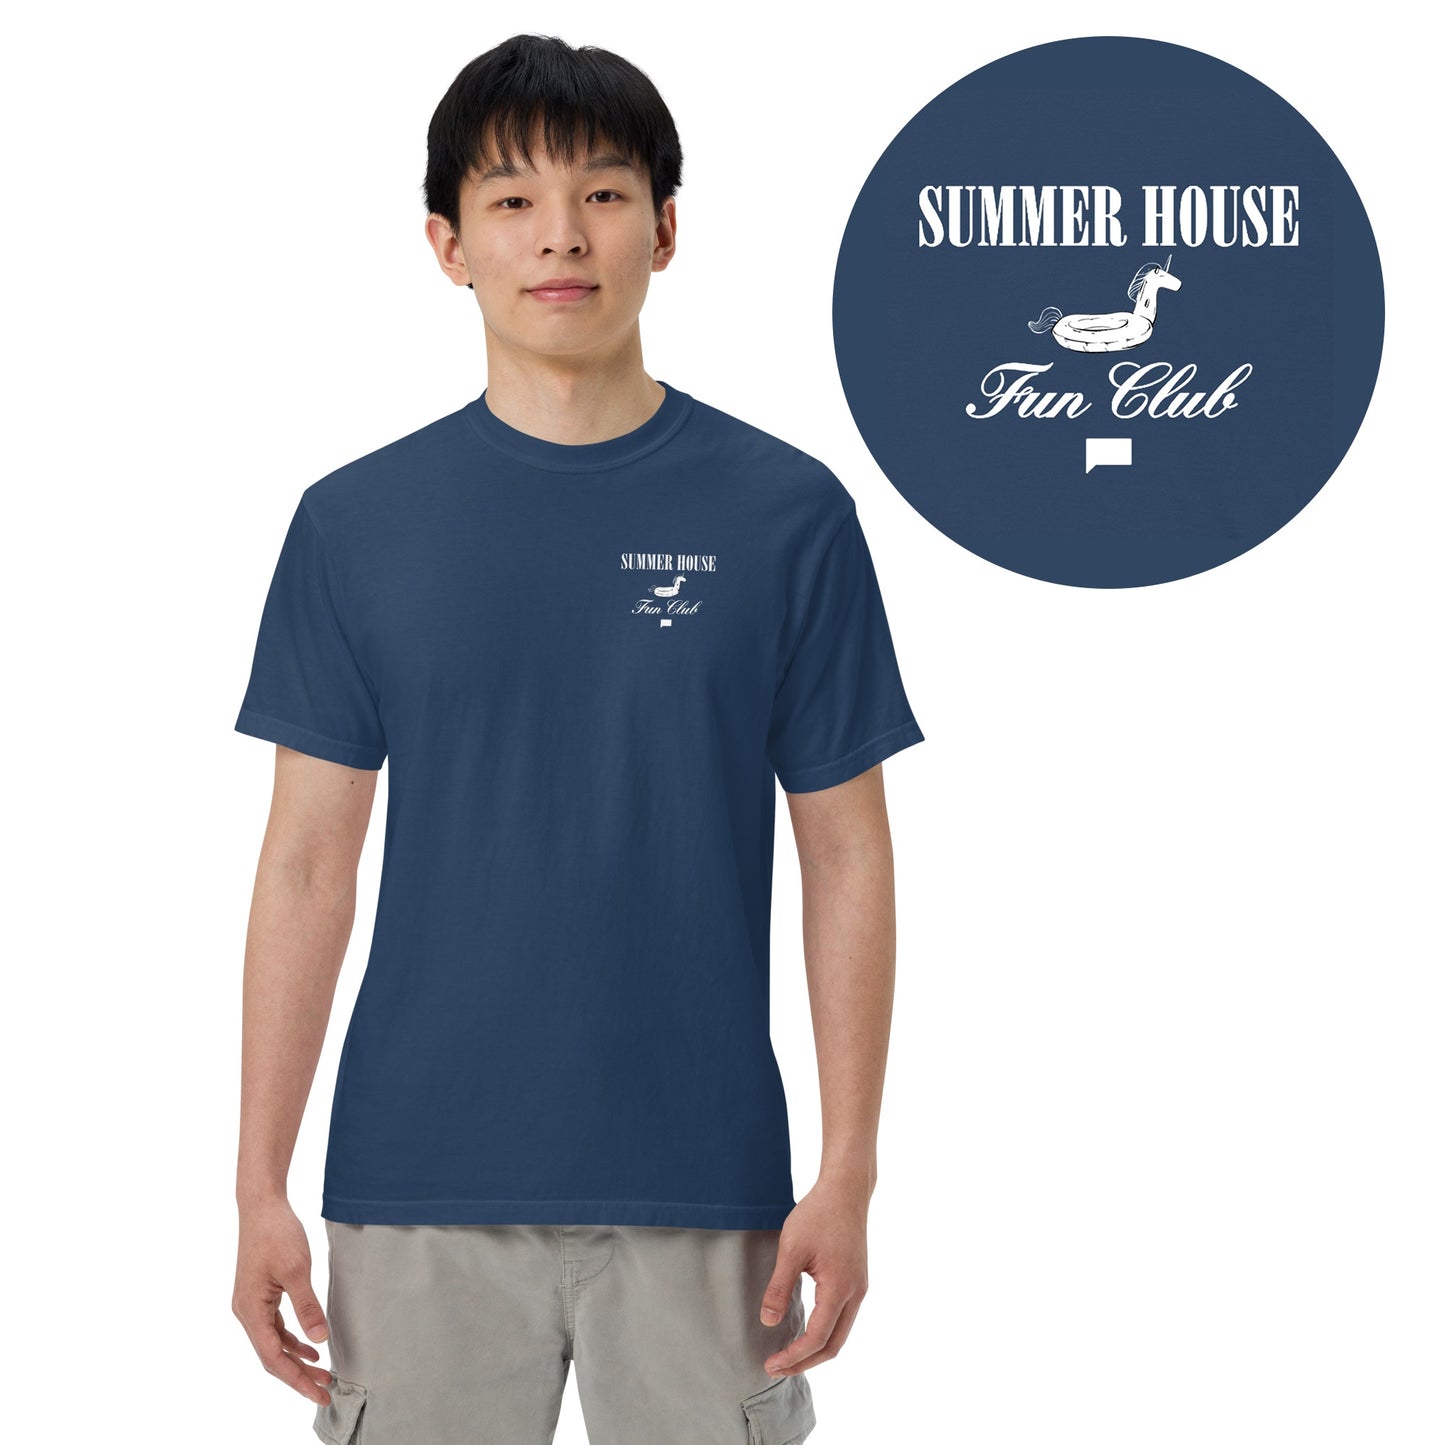 Summer House Fun Club Comfort Colors T-Shirt